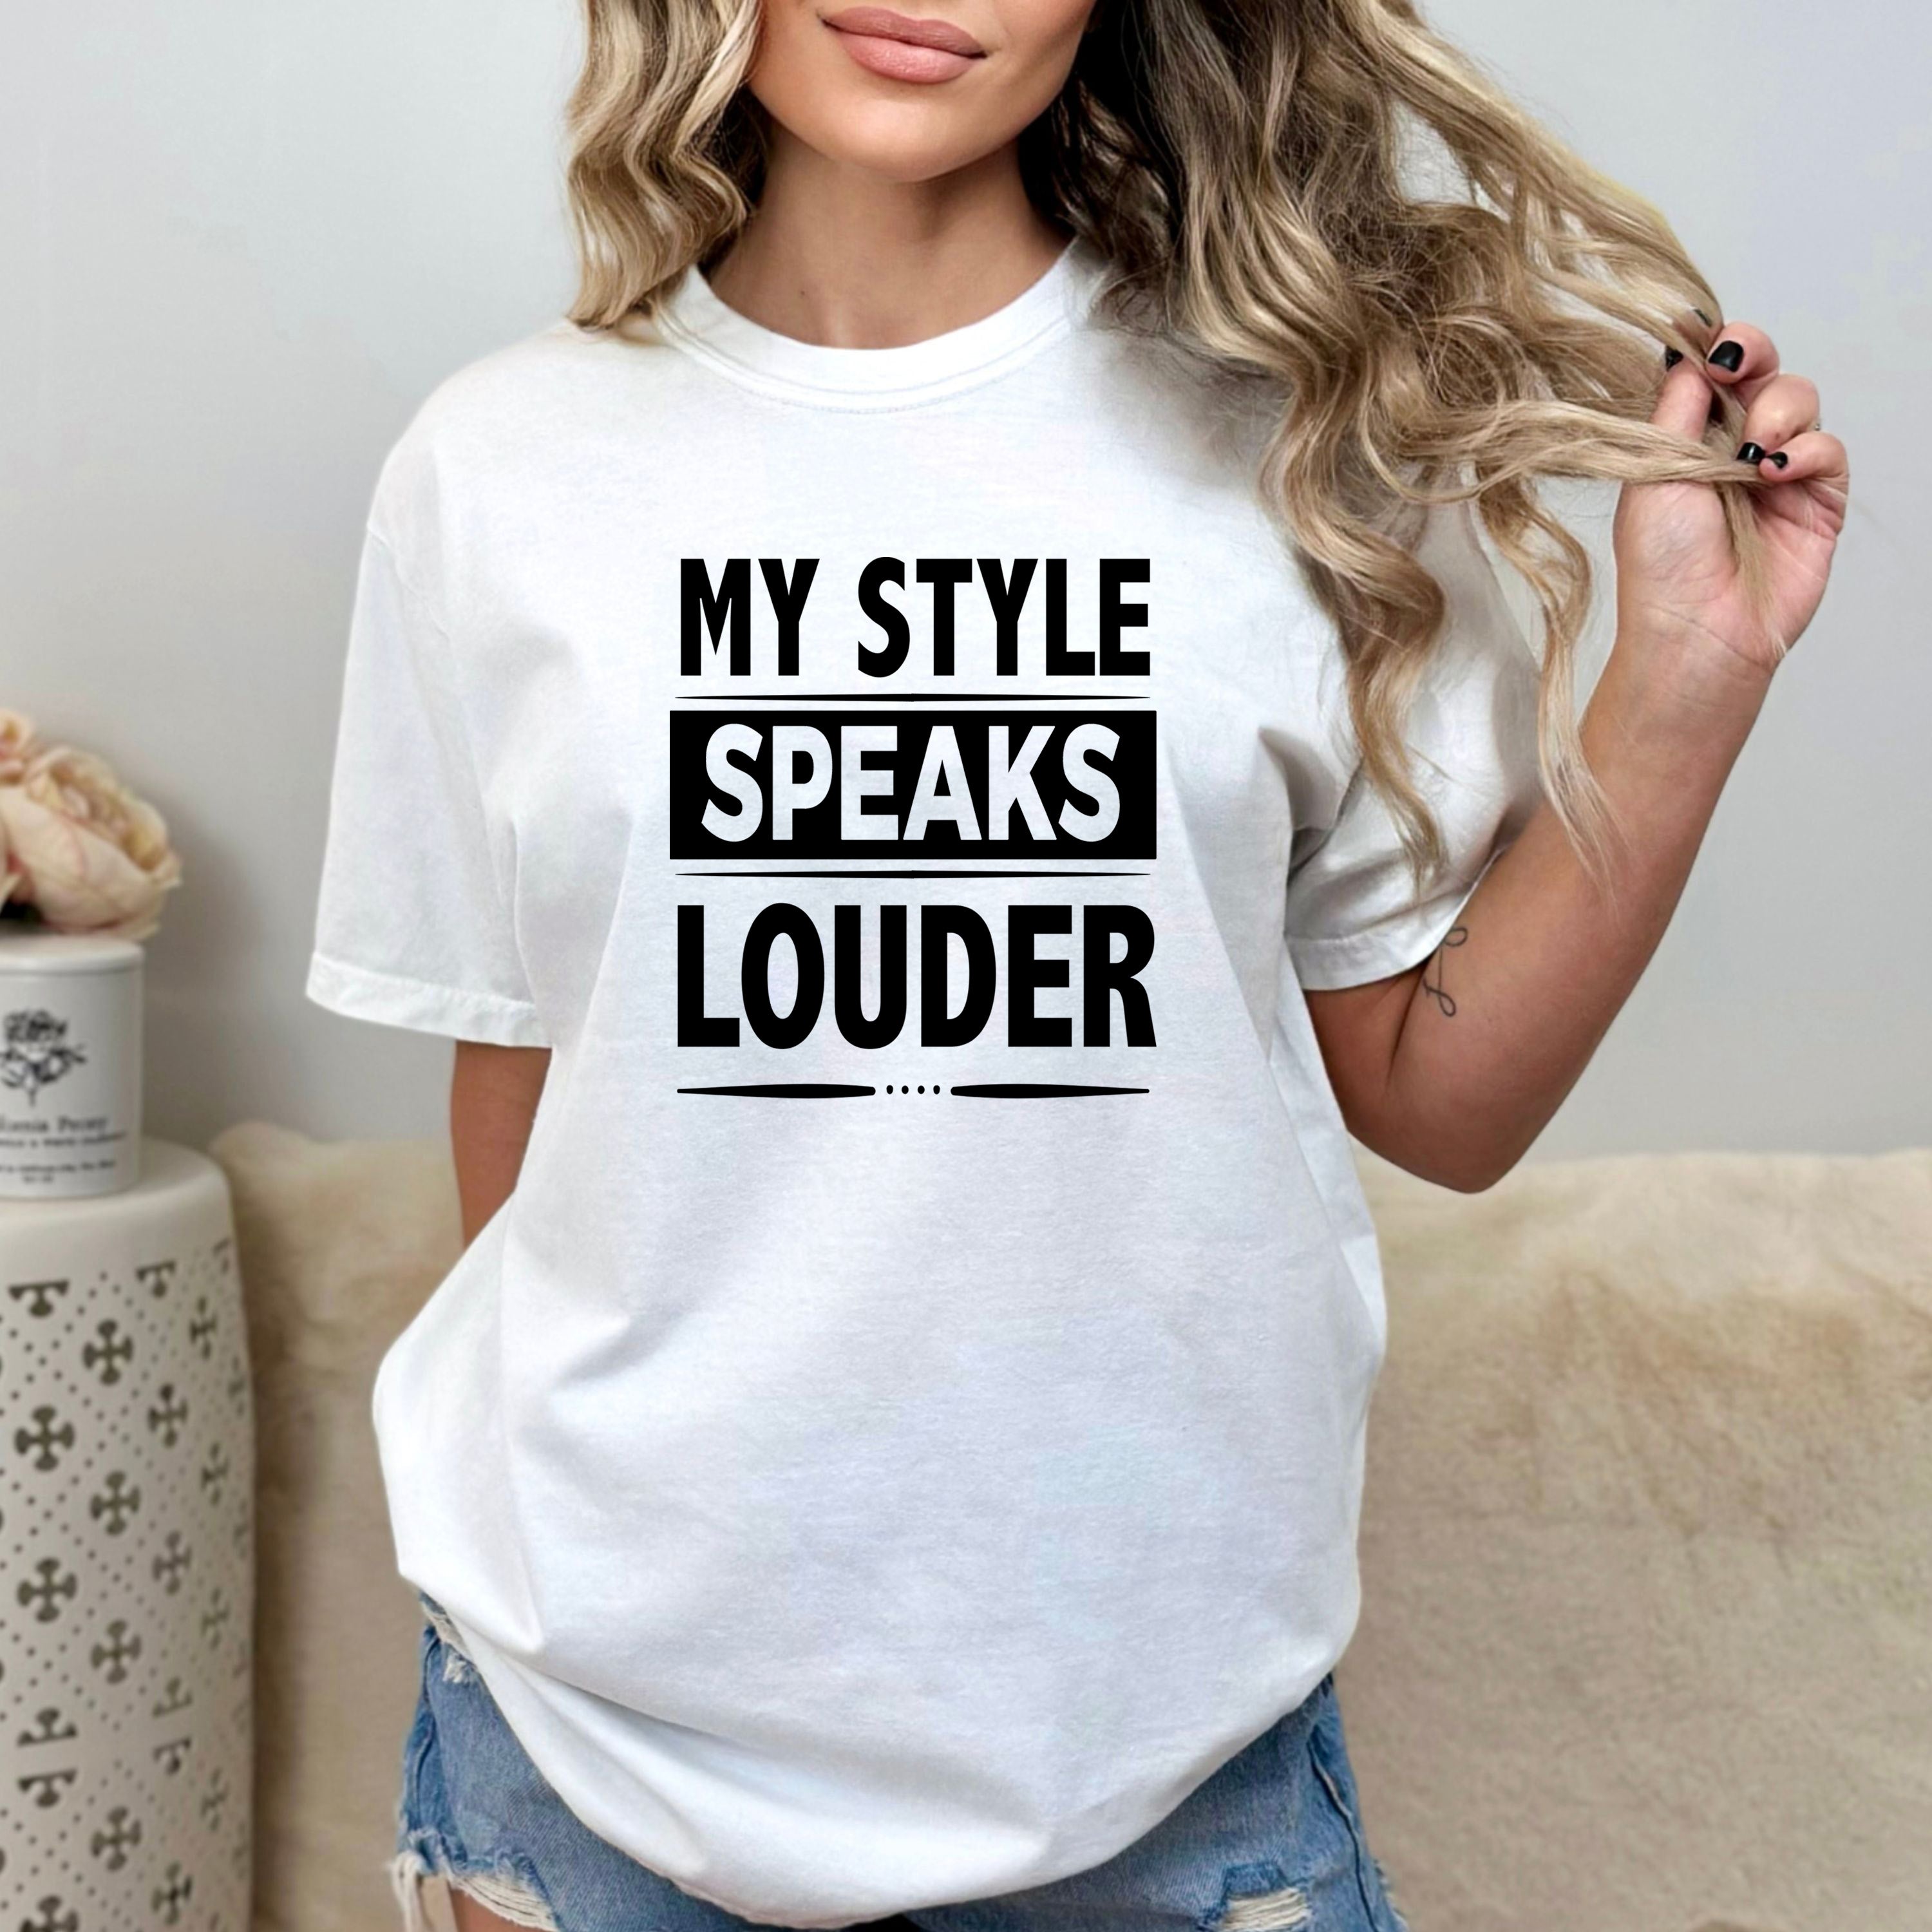 My Style Speaks Louder - Unisex Tee